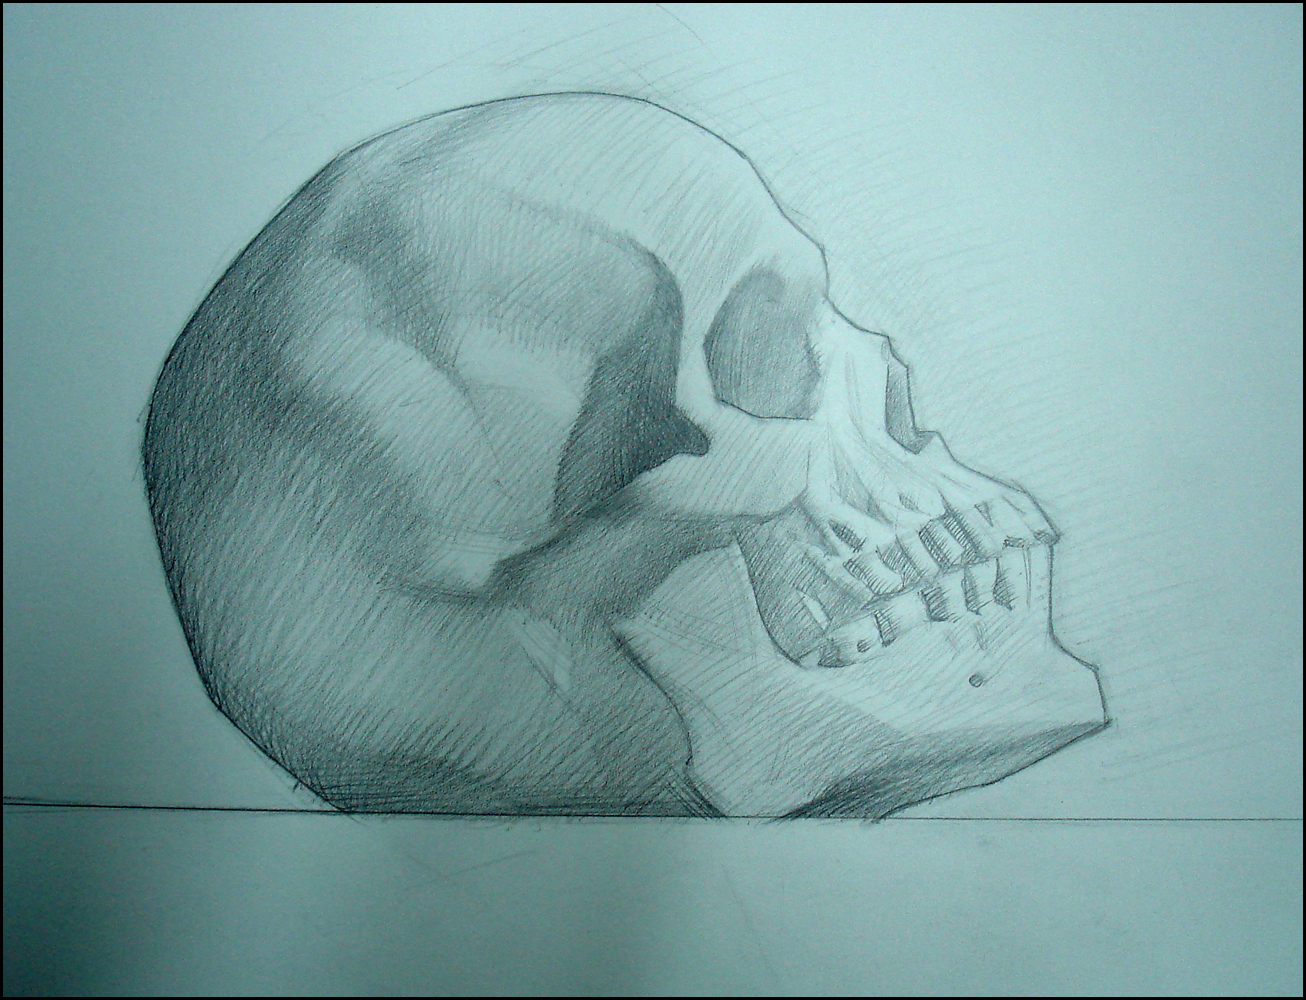 Skull in Profile, pencil on paper, 9x12 inches